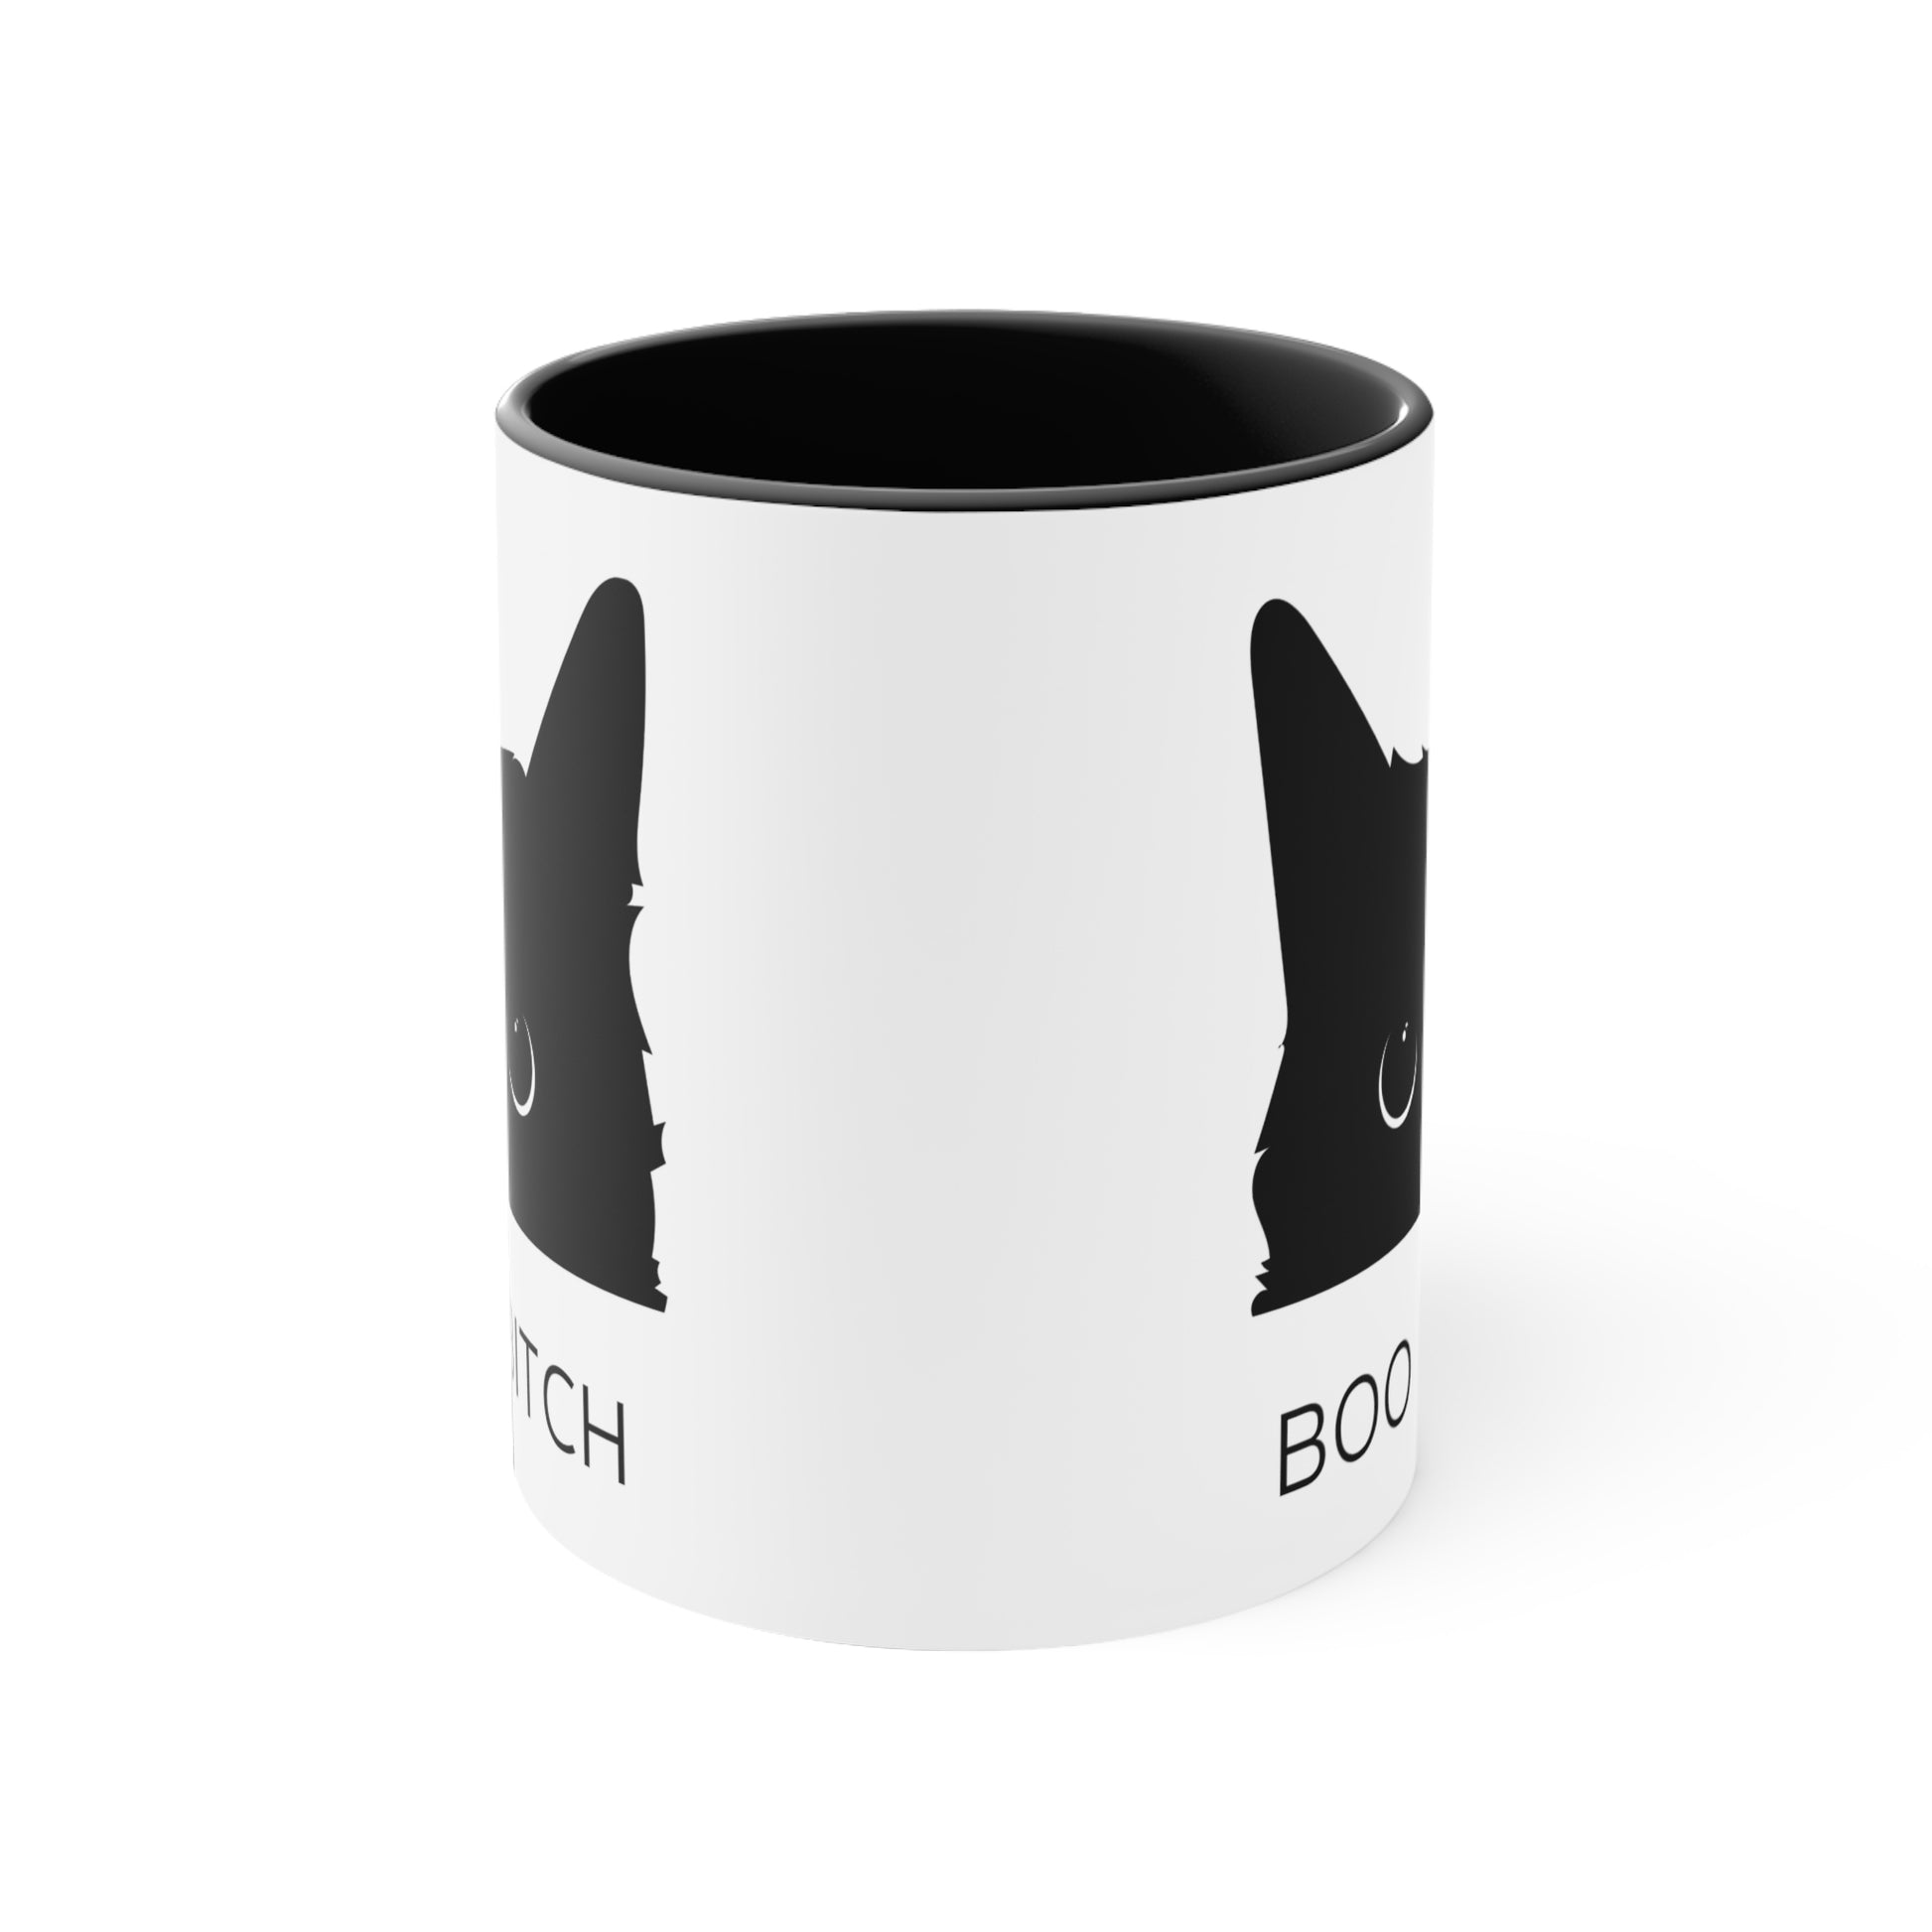 Boo Bitch Black Cat Accent Coffee Mug Funny Halloween Gift 11oz - Design Club Home